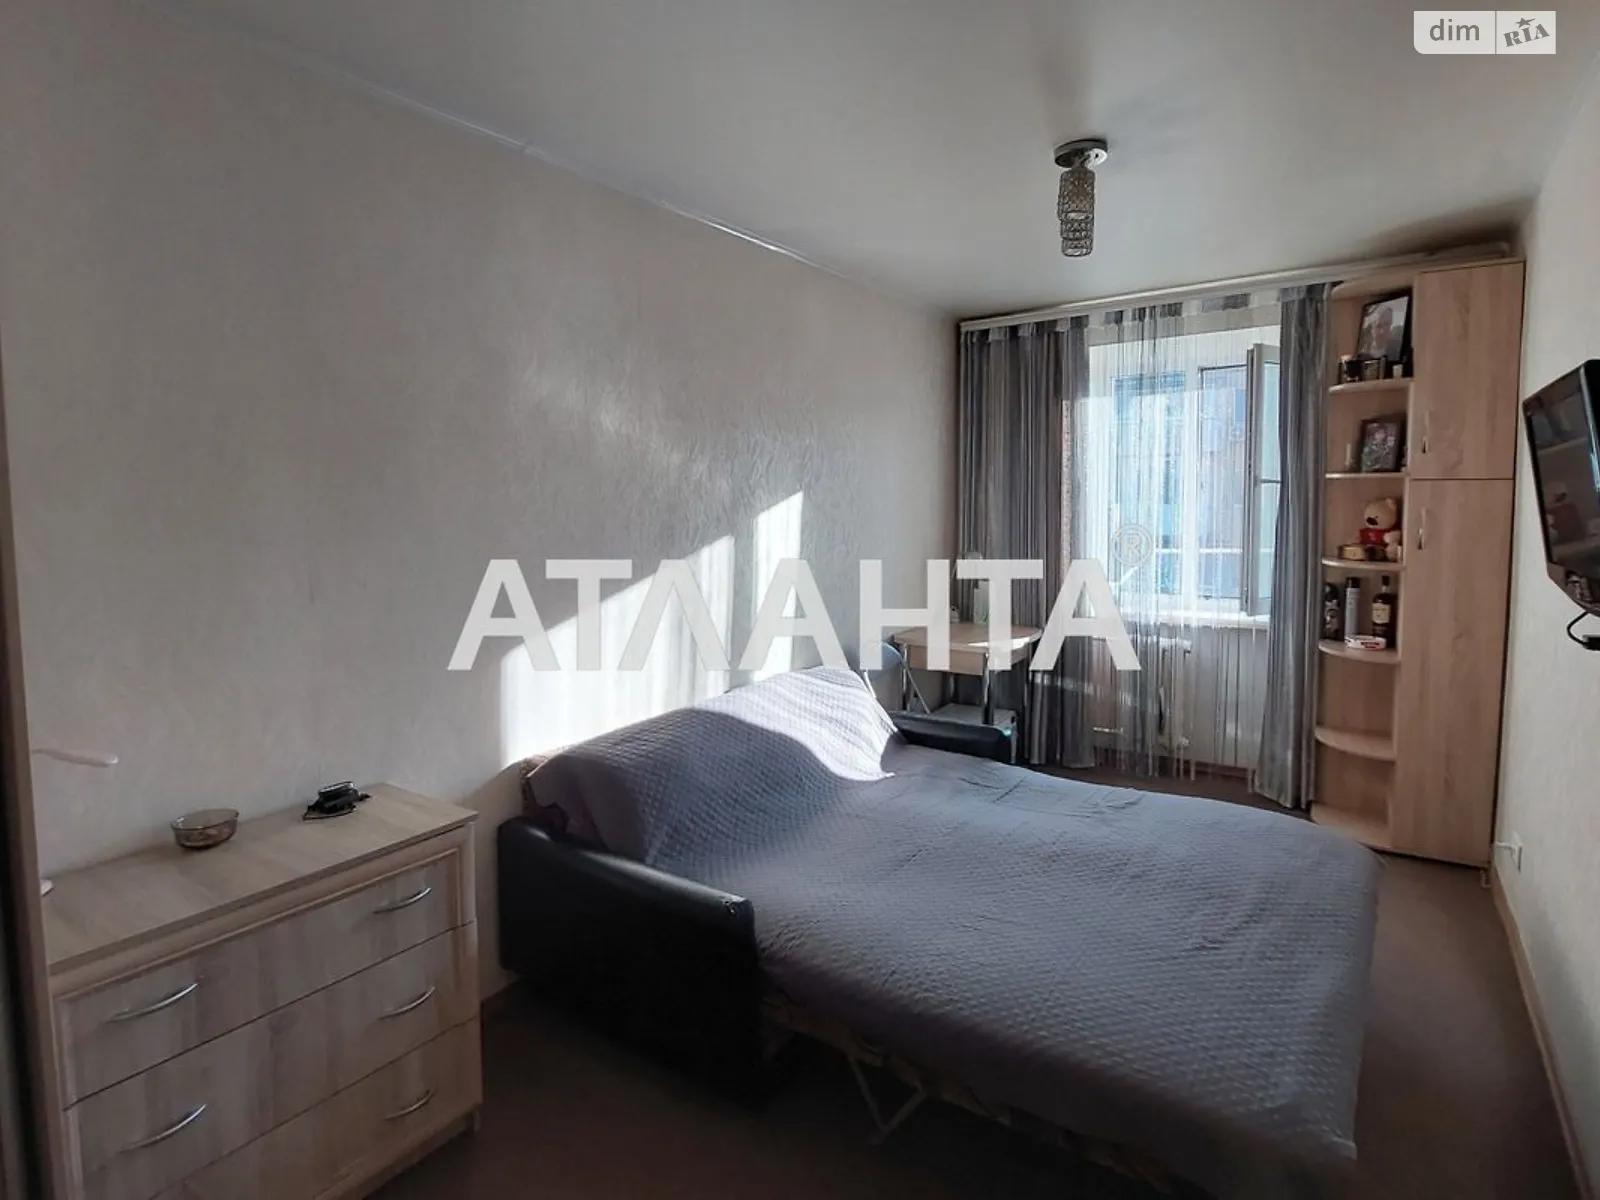 Продается комната 35 кв. м в Одессе, цена: 15000 $ - фото 1